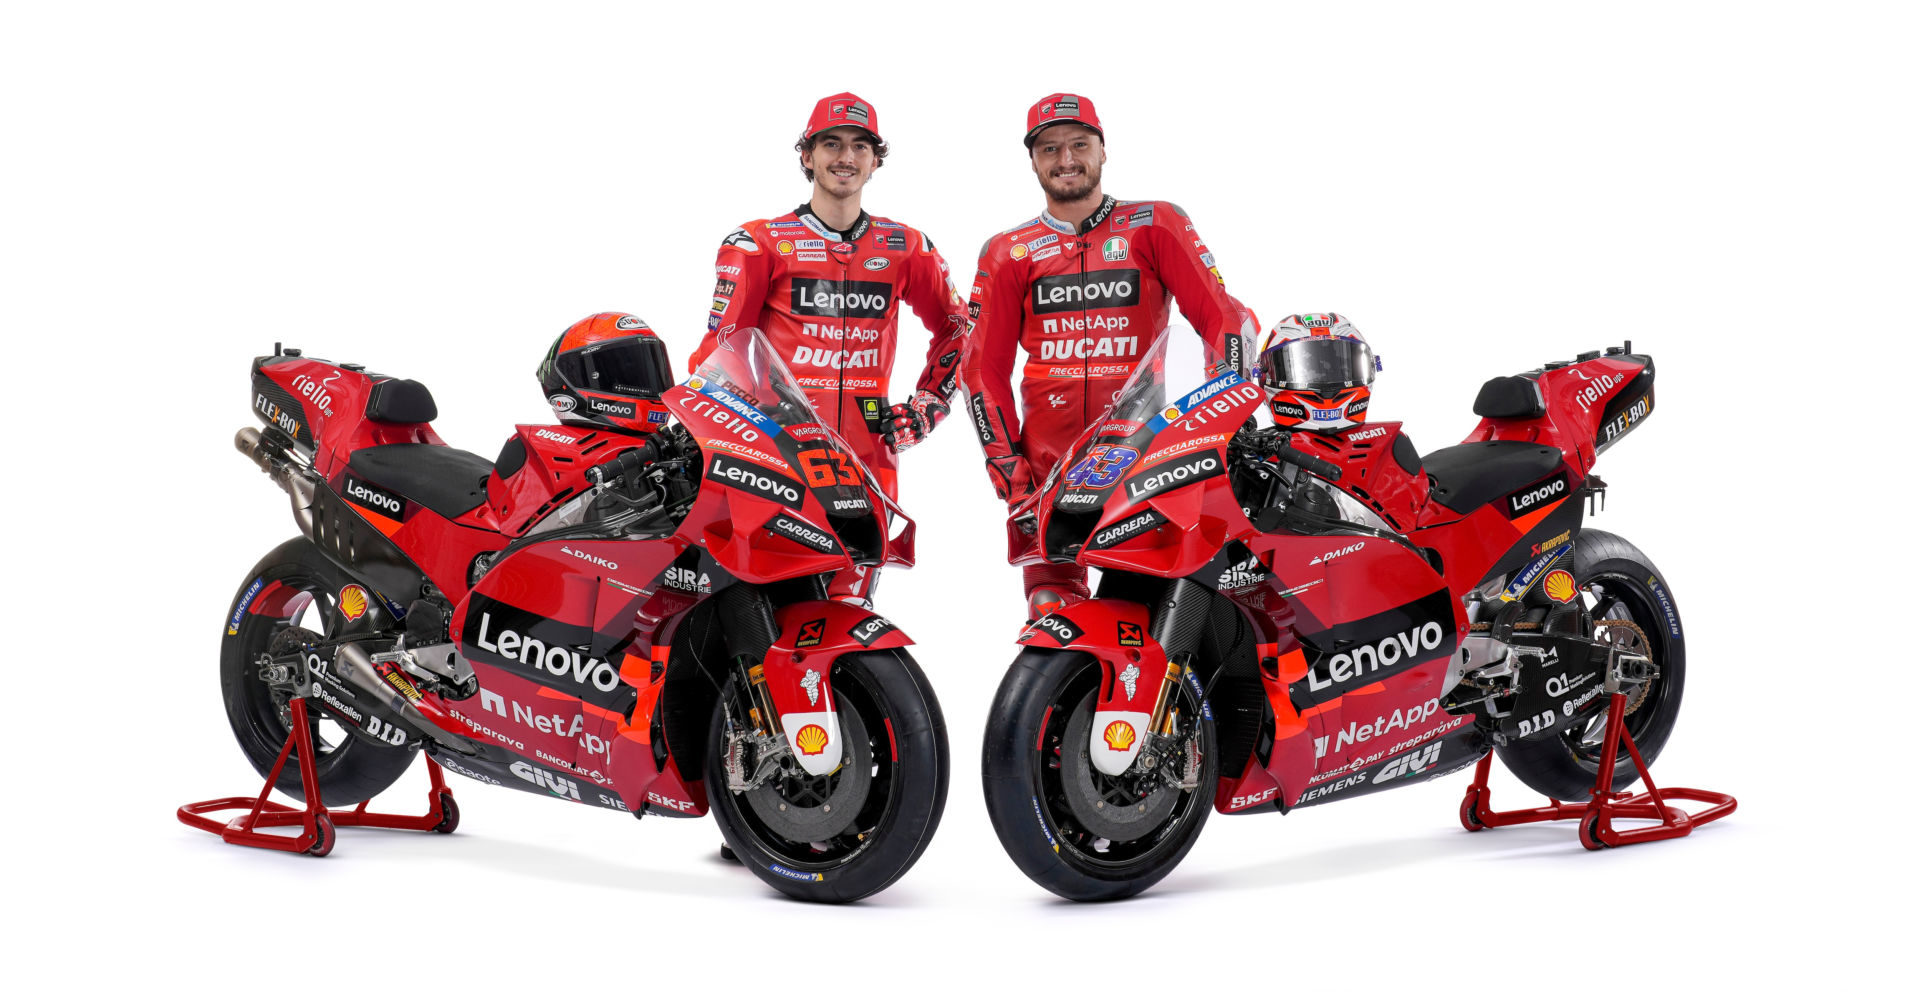 Ducati Lenovo Team riders Francesco Bagnaia (left) and Jack Miller (right). Photo courtesy Ducati.